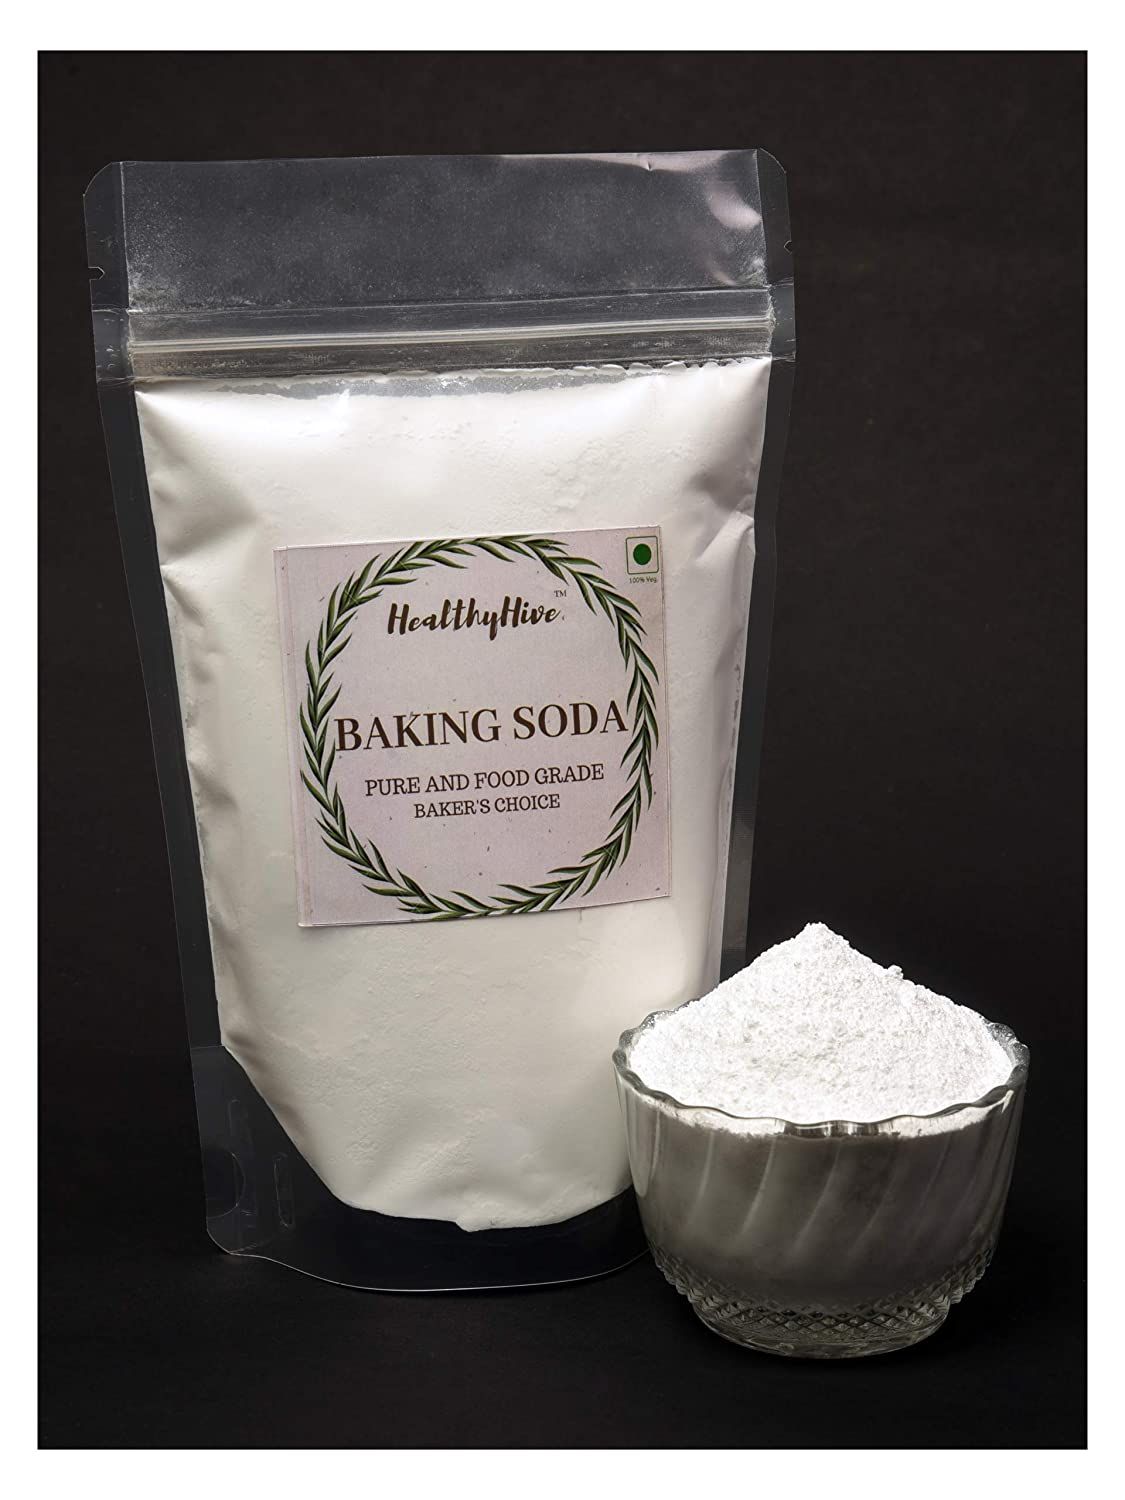 Healthyhive Baking Soda Image